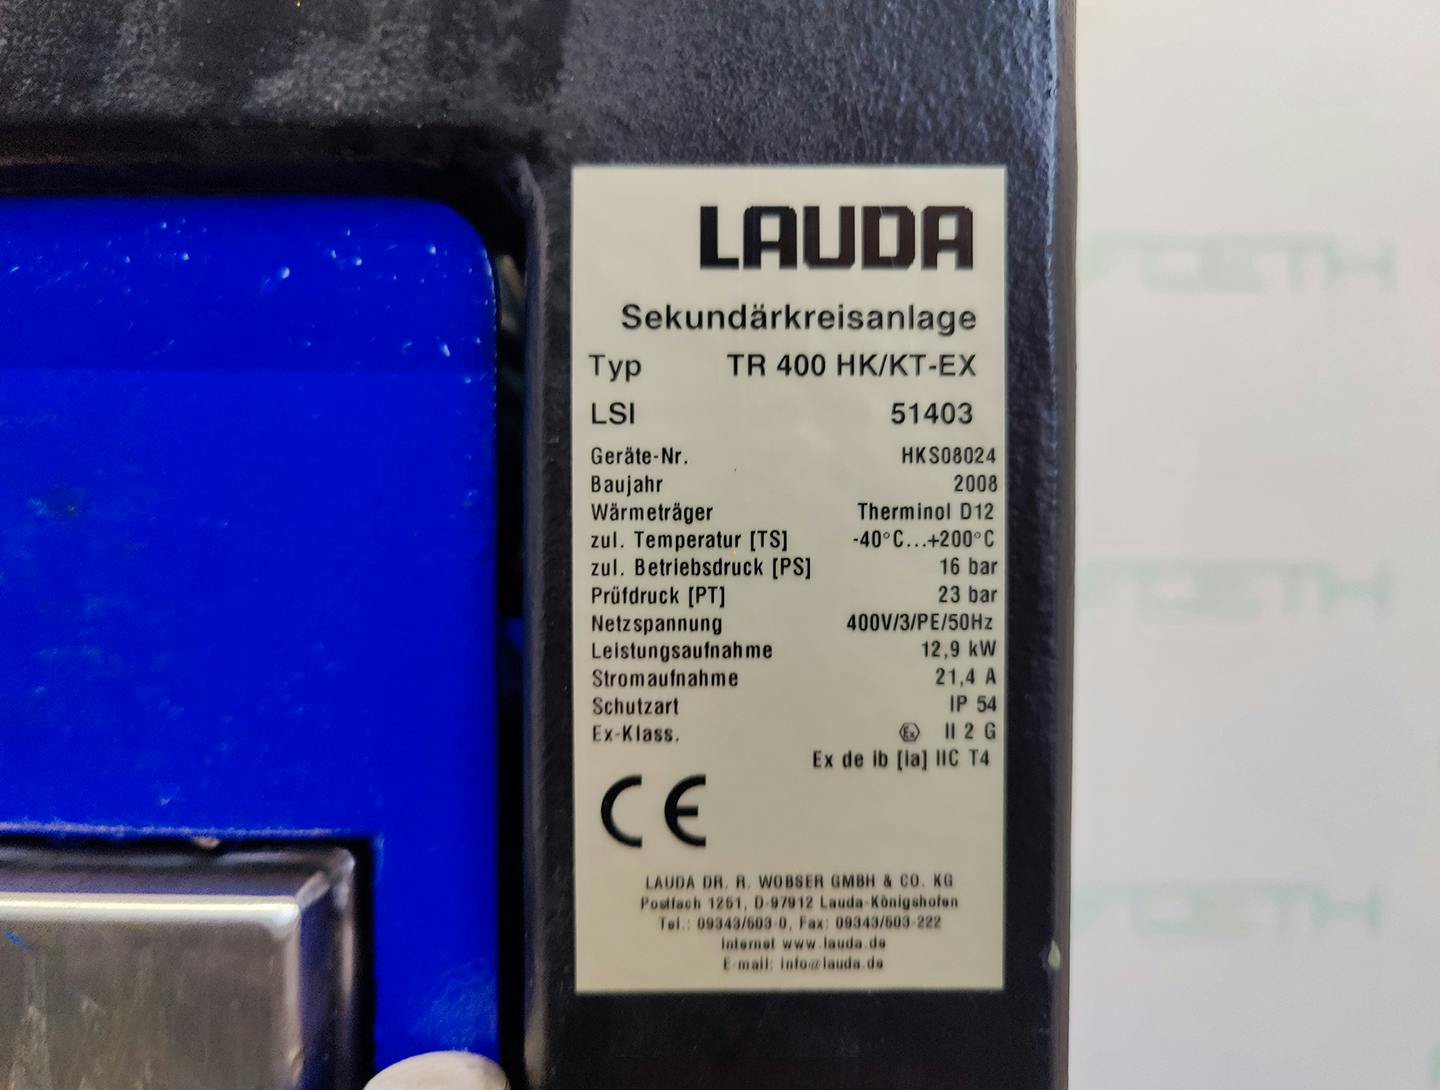 Lauda TR400 HK/KT-EX "secondary circuit system" - Chladic recirkulacní - image 5